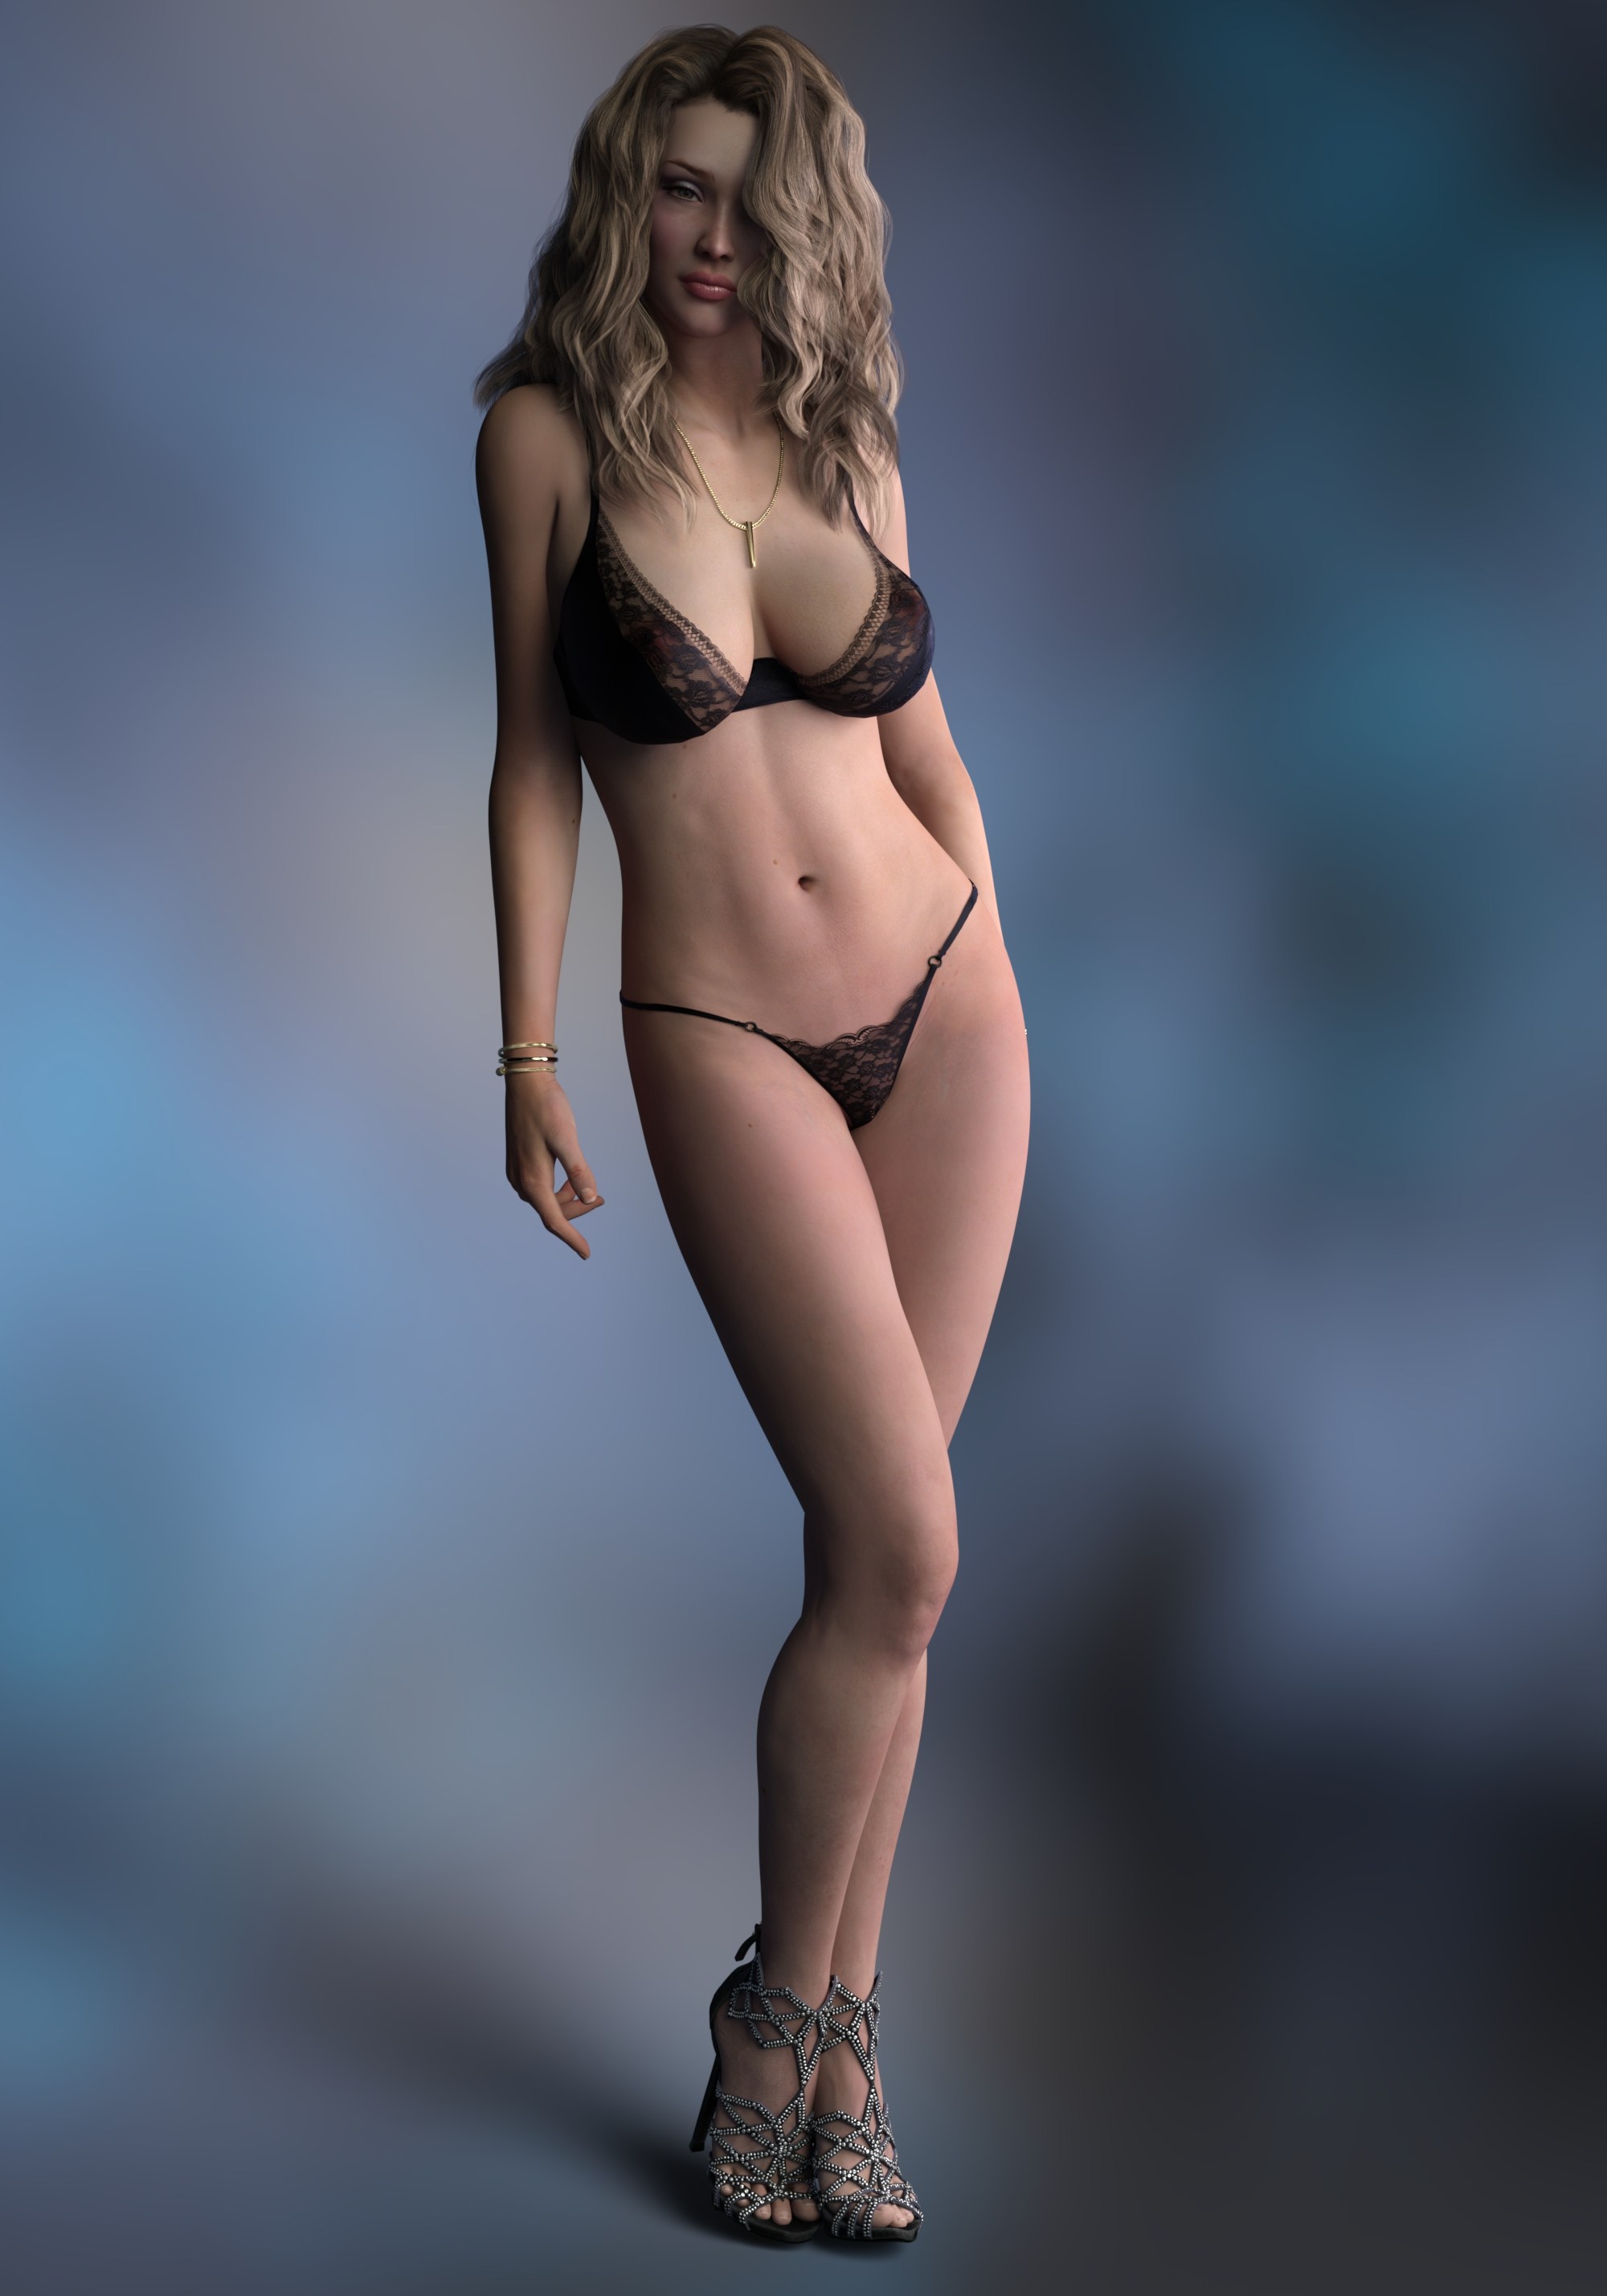 Sexy Midget Girl Nude - Naked Midget Women in Sexy Lingerie (63 photos) - sex eporner pics